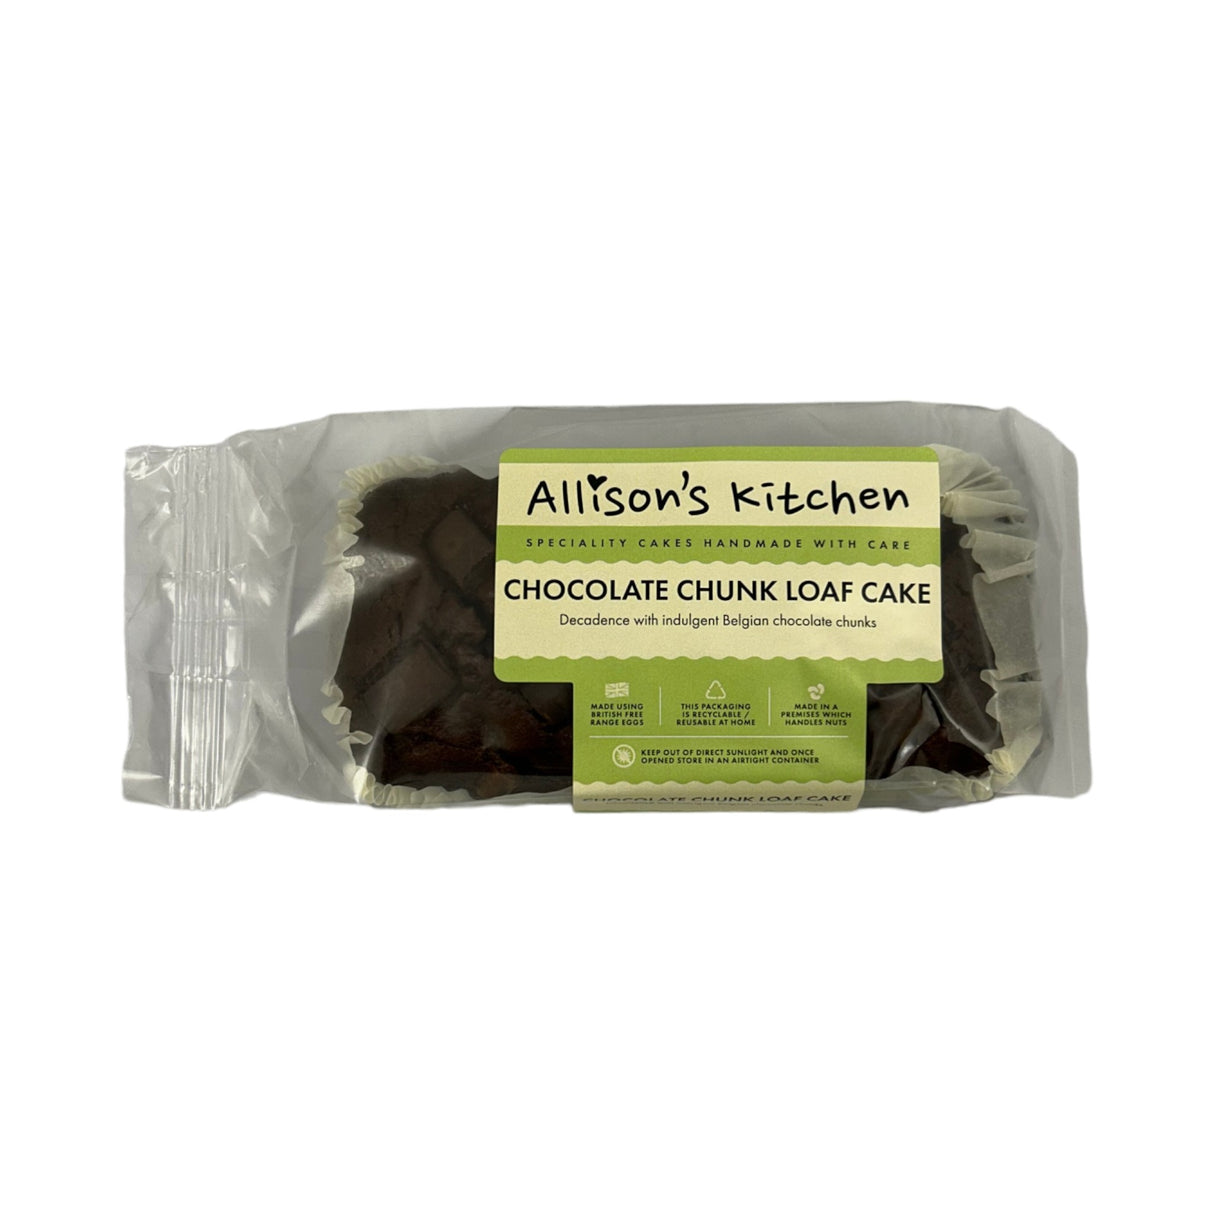 Allison's Kitchen Chocolate Chunk Loaf Cake